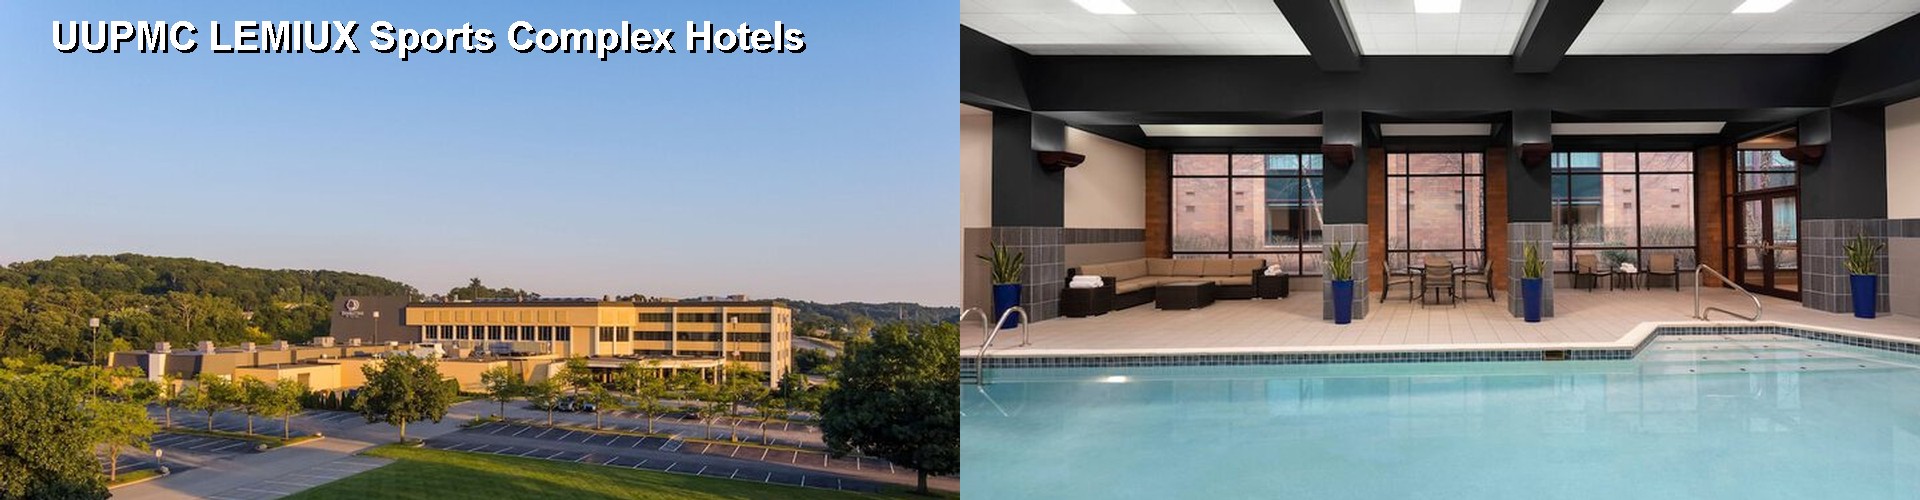 5 Best Hotels near UUPMC LEMIUX Sports Complex